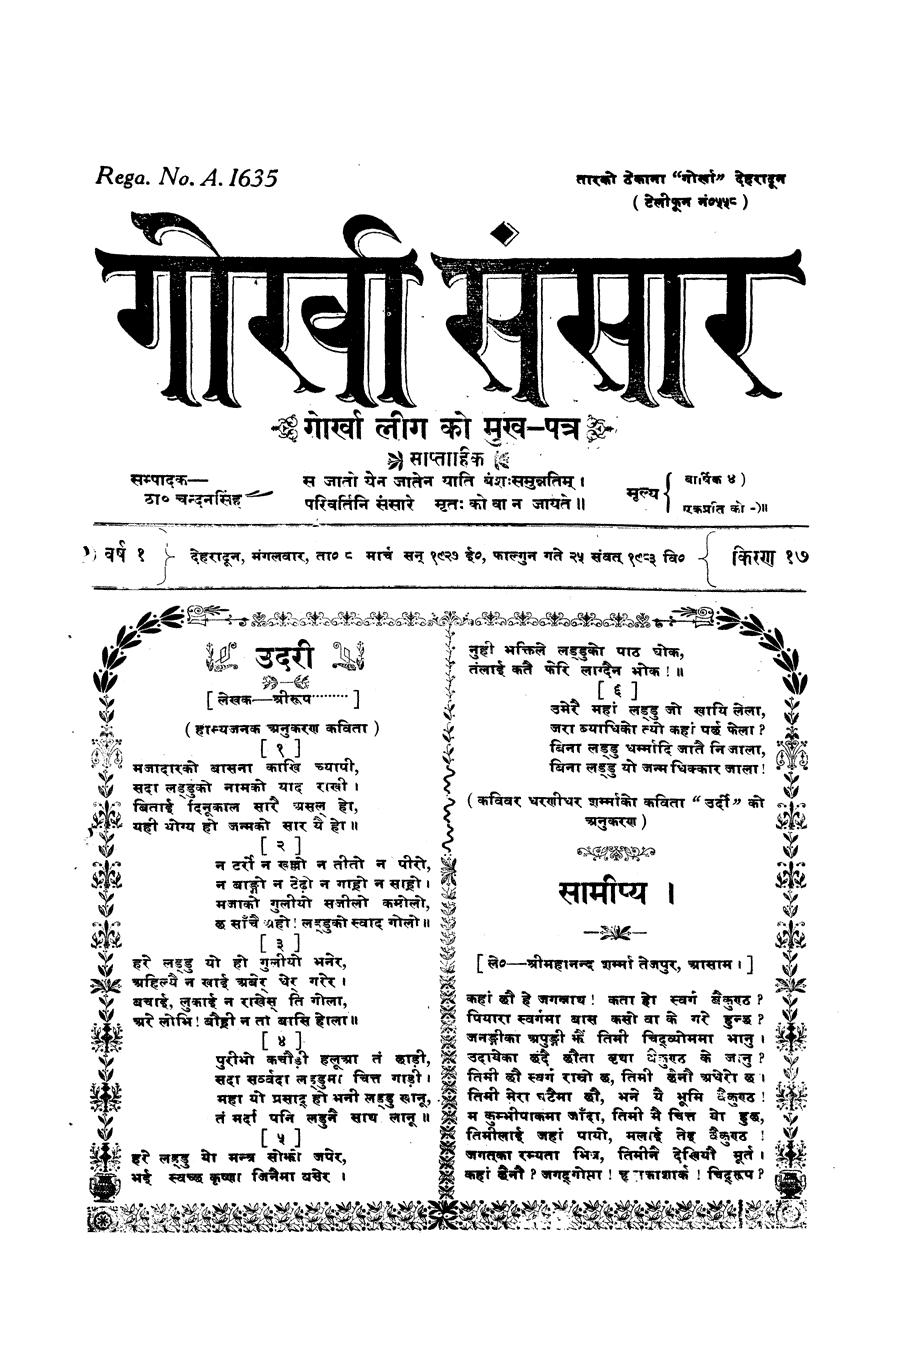 Gorkha Sansar, 8 Mar 1927, page 1